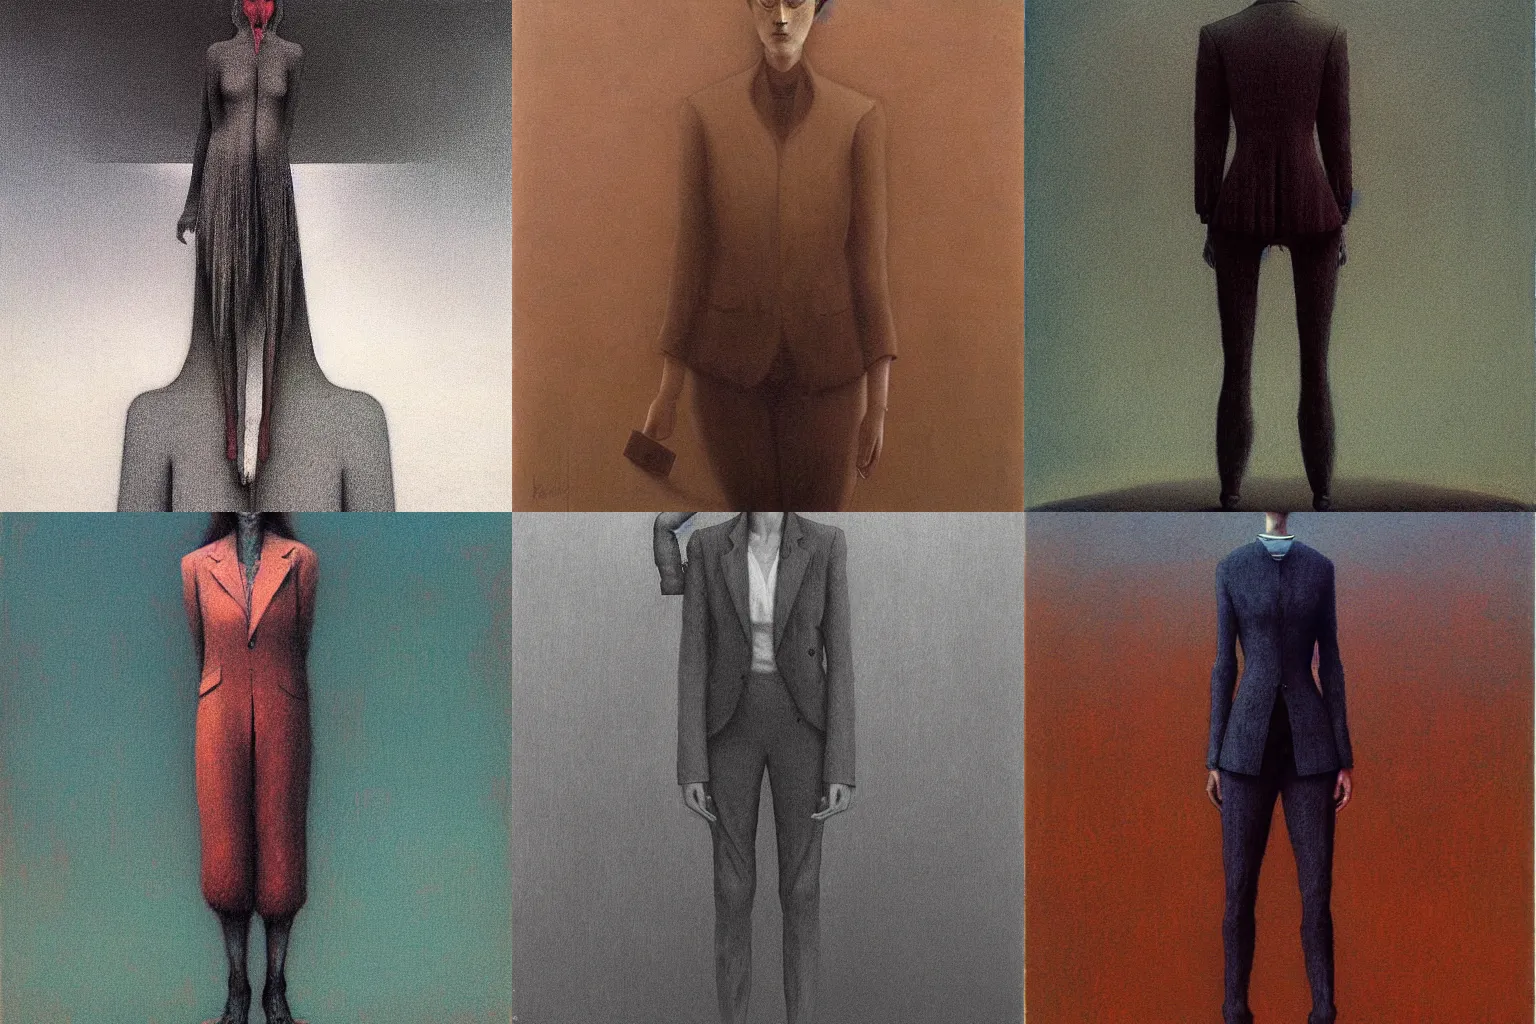 Prompt: full body portrait of female in suit by Beksinski